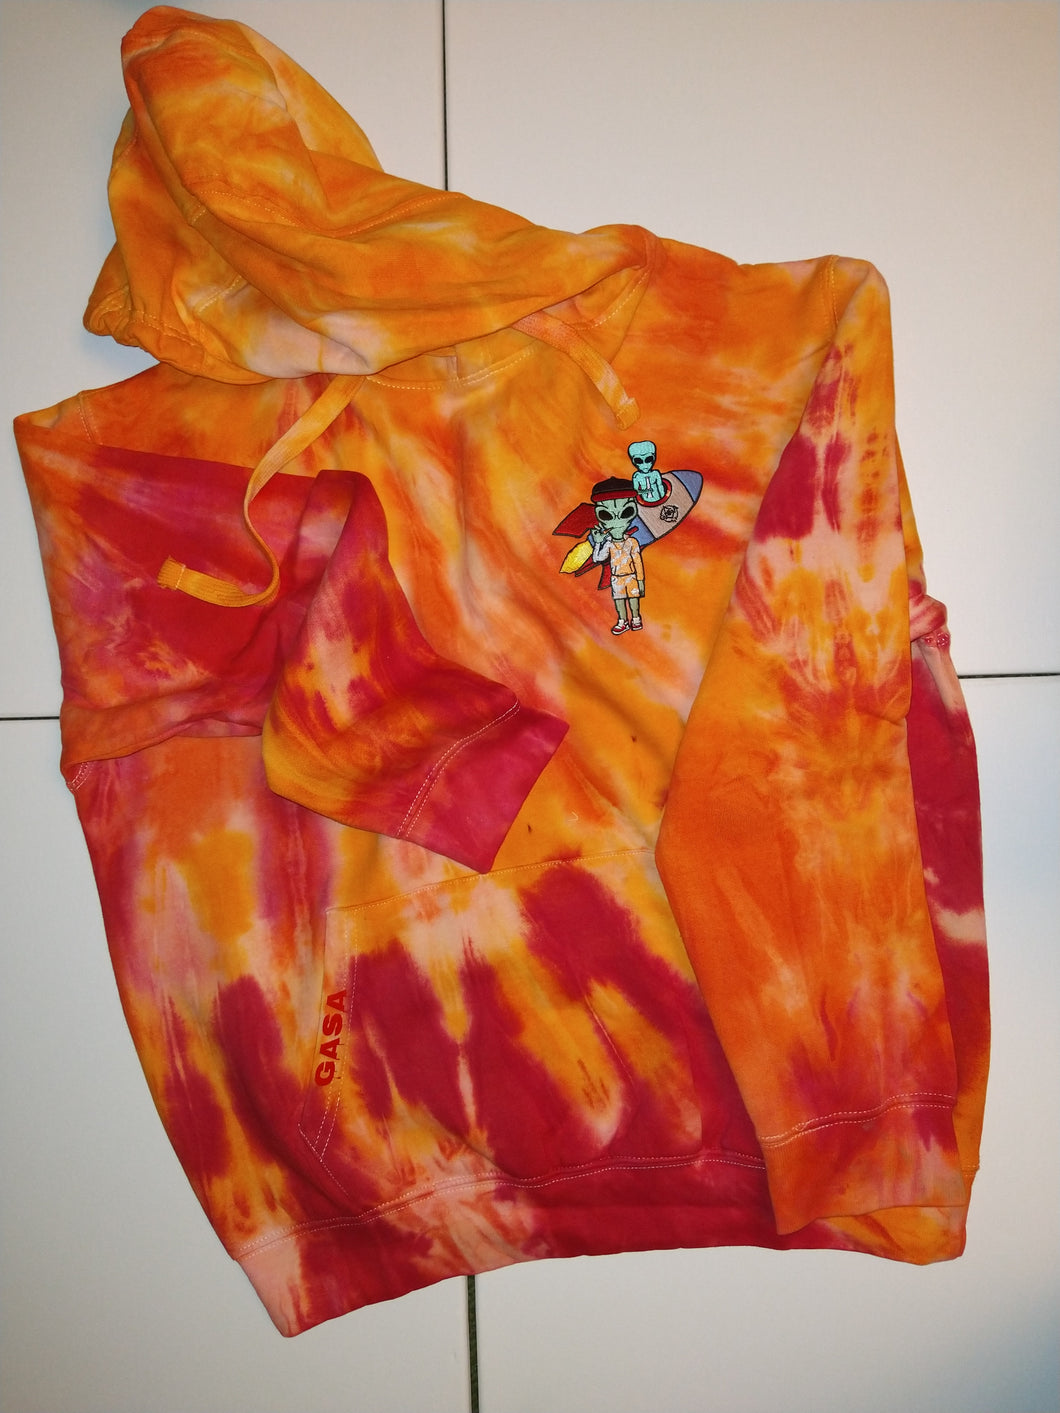 GASA tie-dye hoody with GASA patch